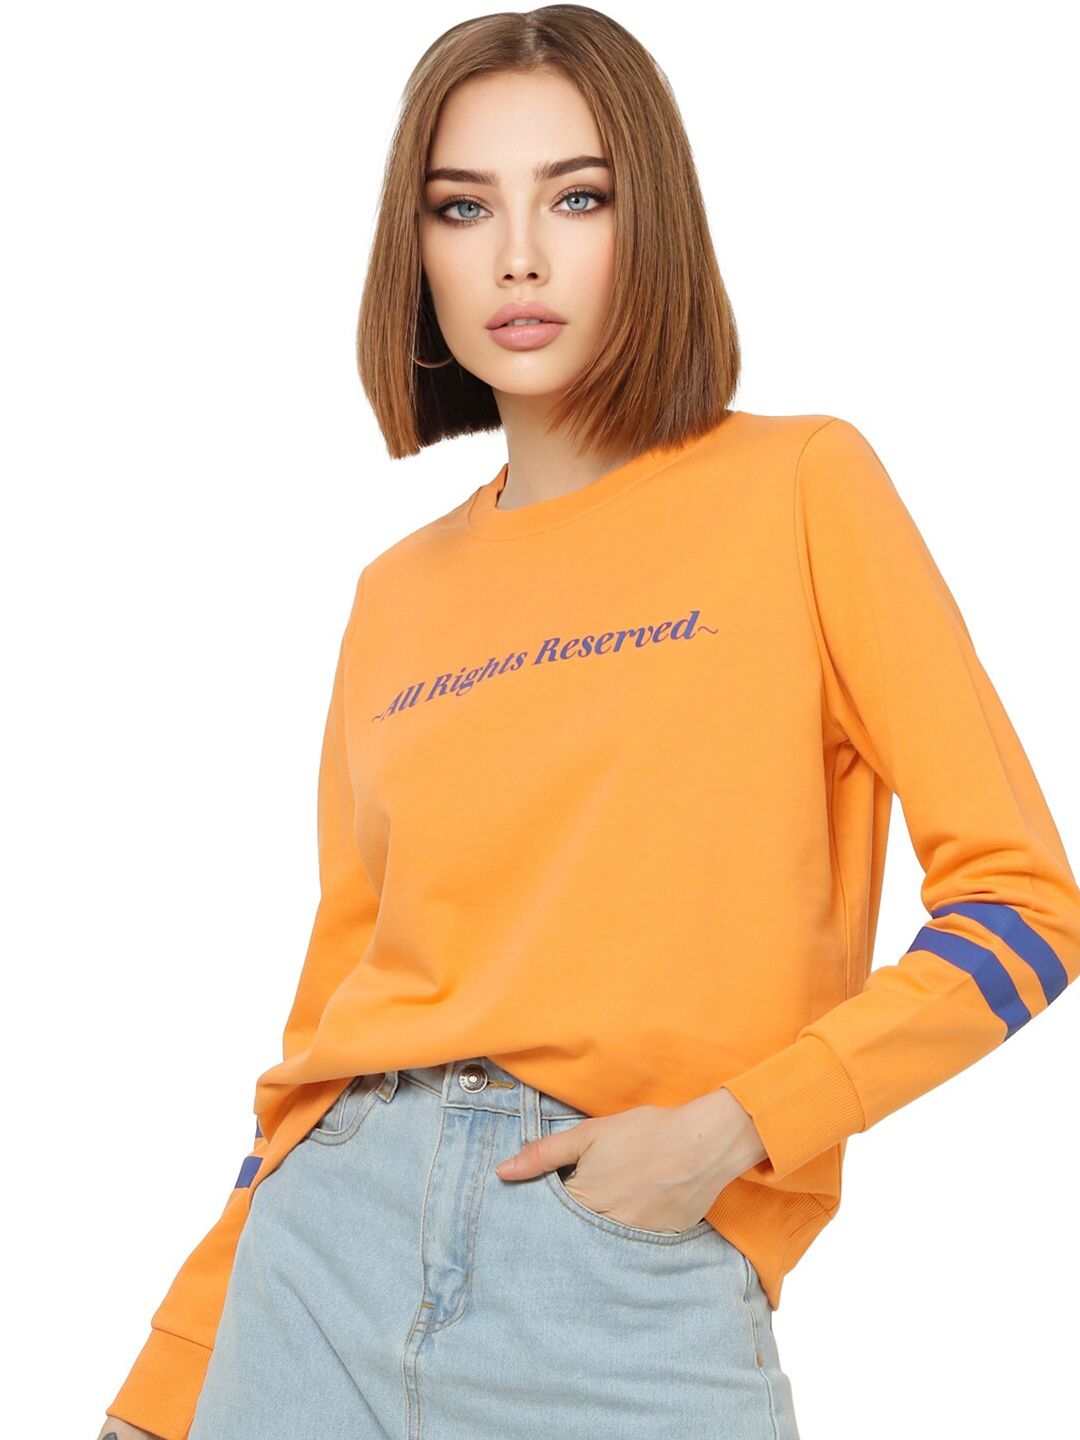 ONLY Women Orange Printed Cotton Sweatshirt Price in India